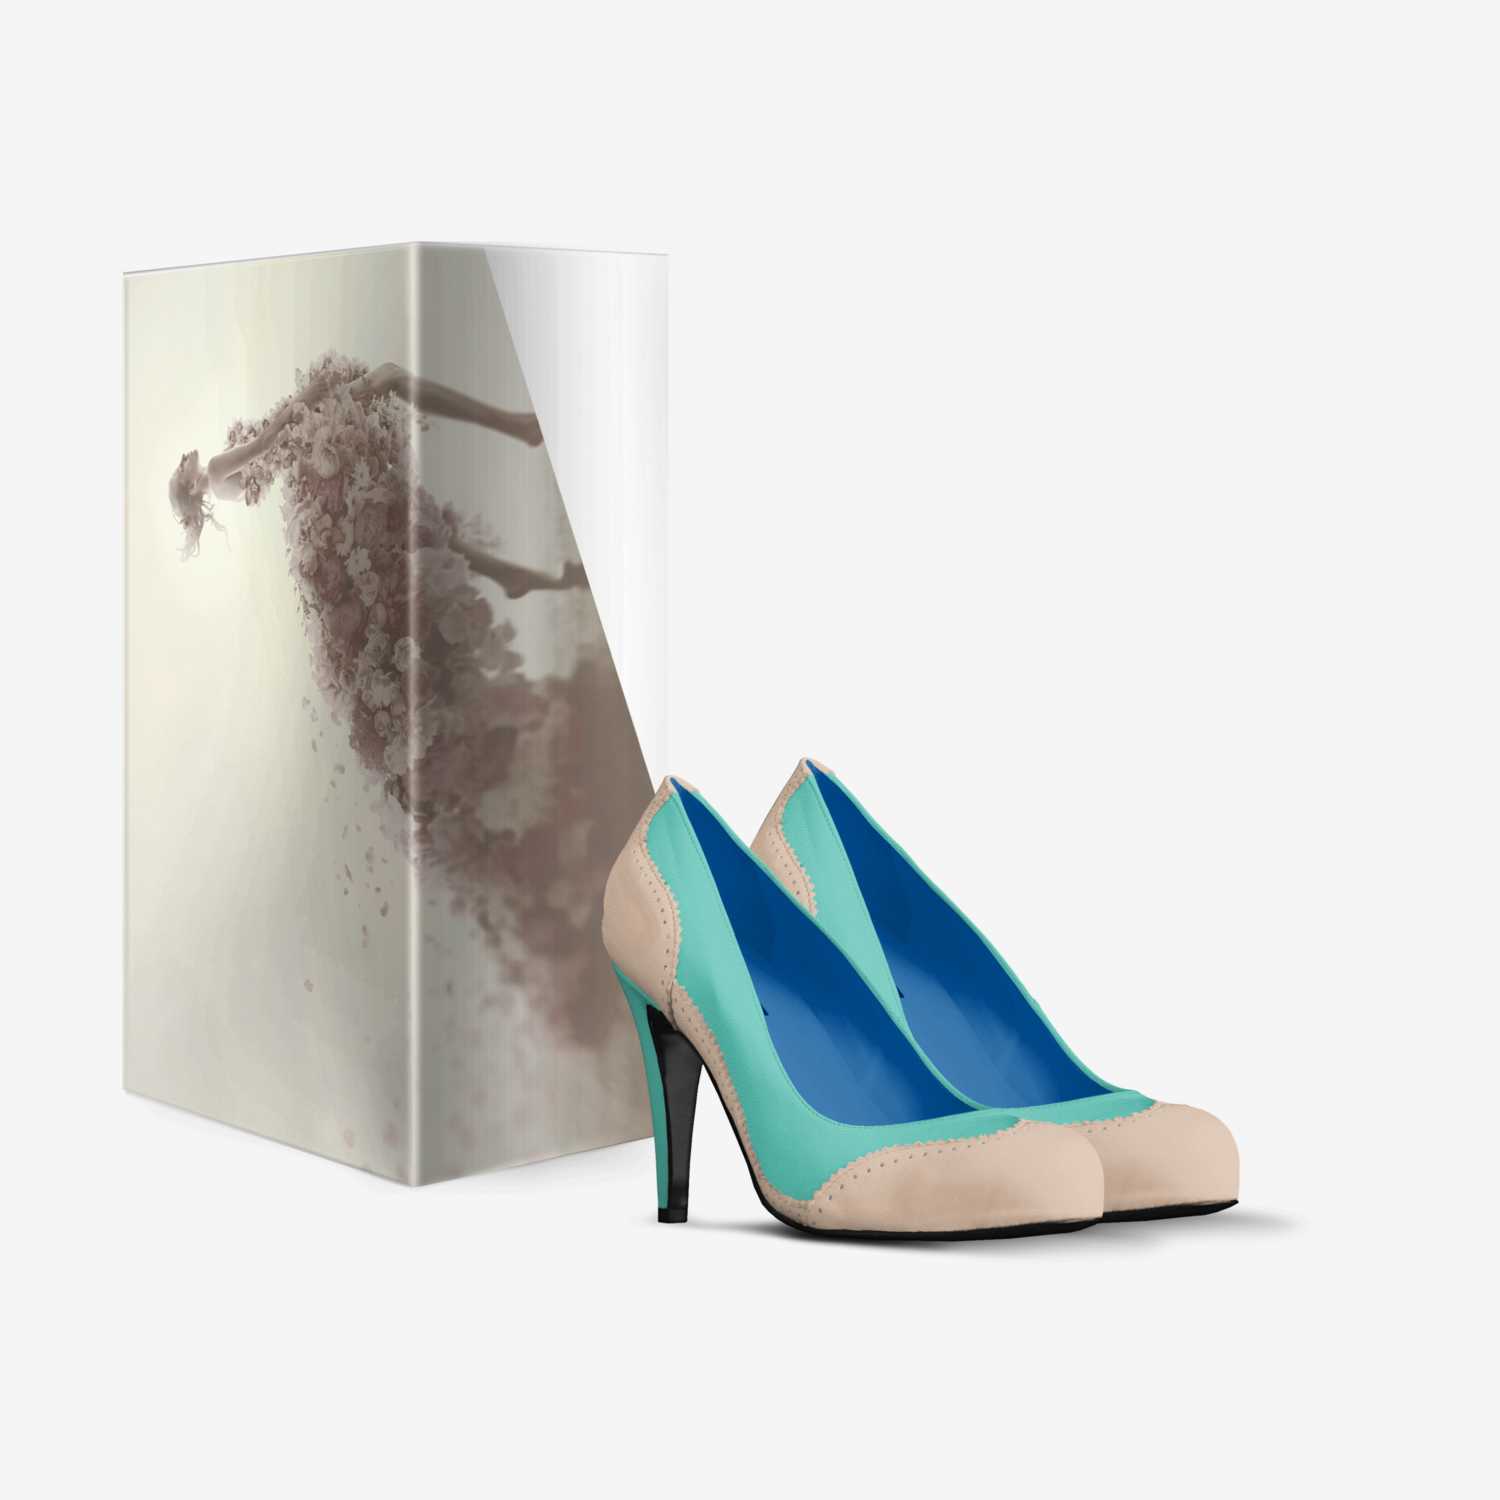 La'avanie spring custom made in Italy shoes by Cherrelle Johnson | Box view